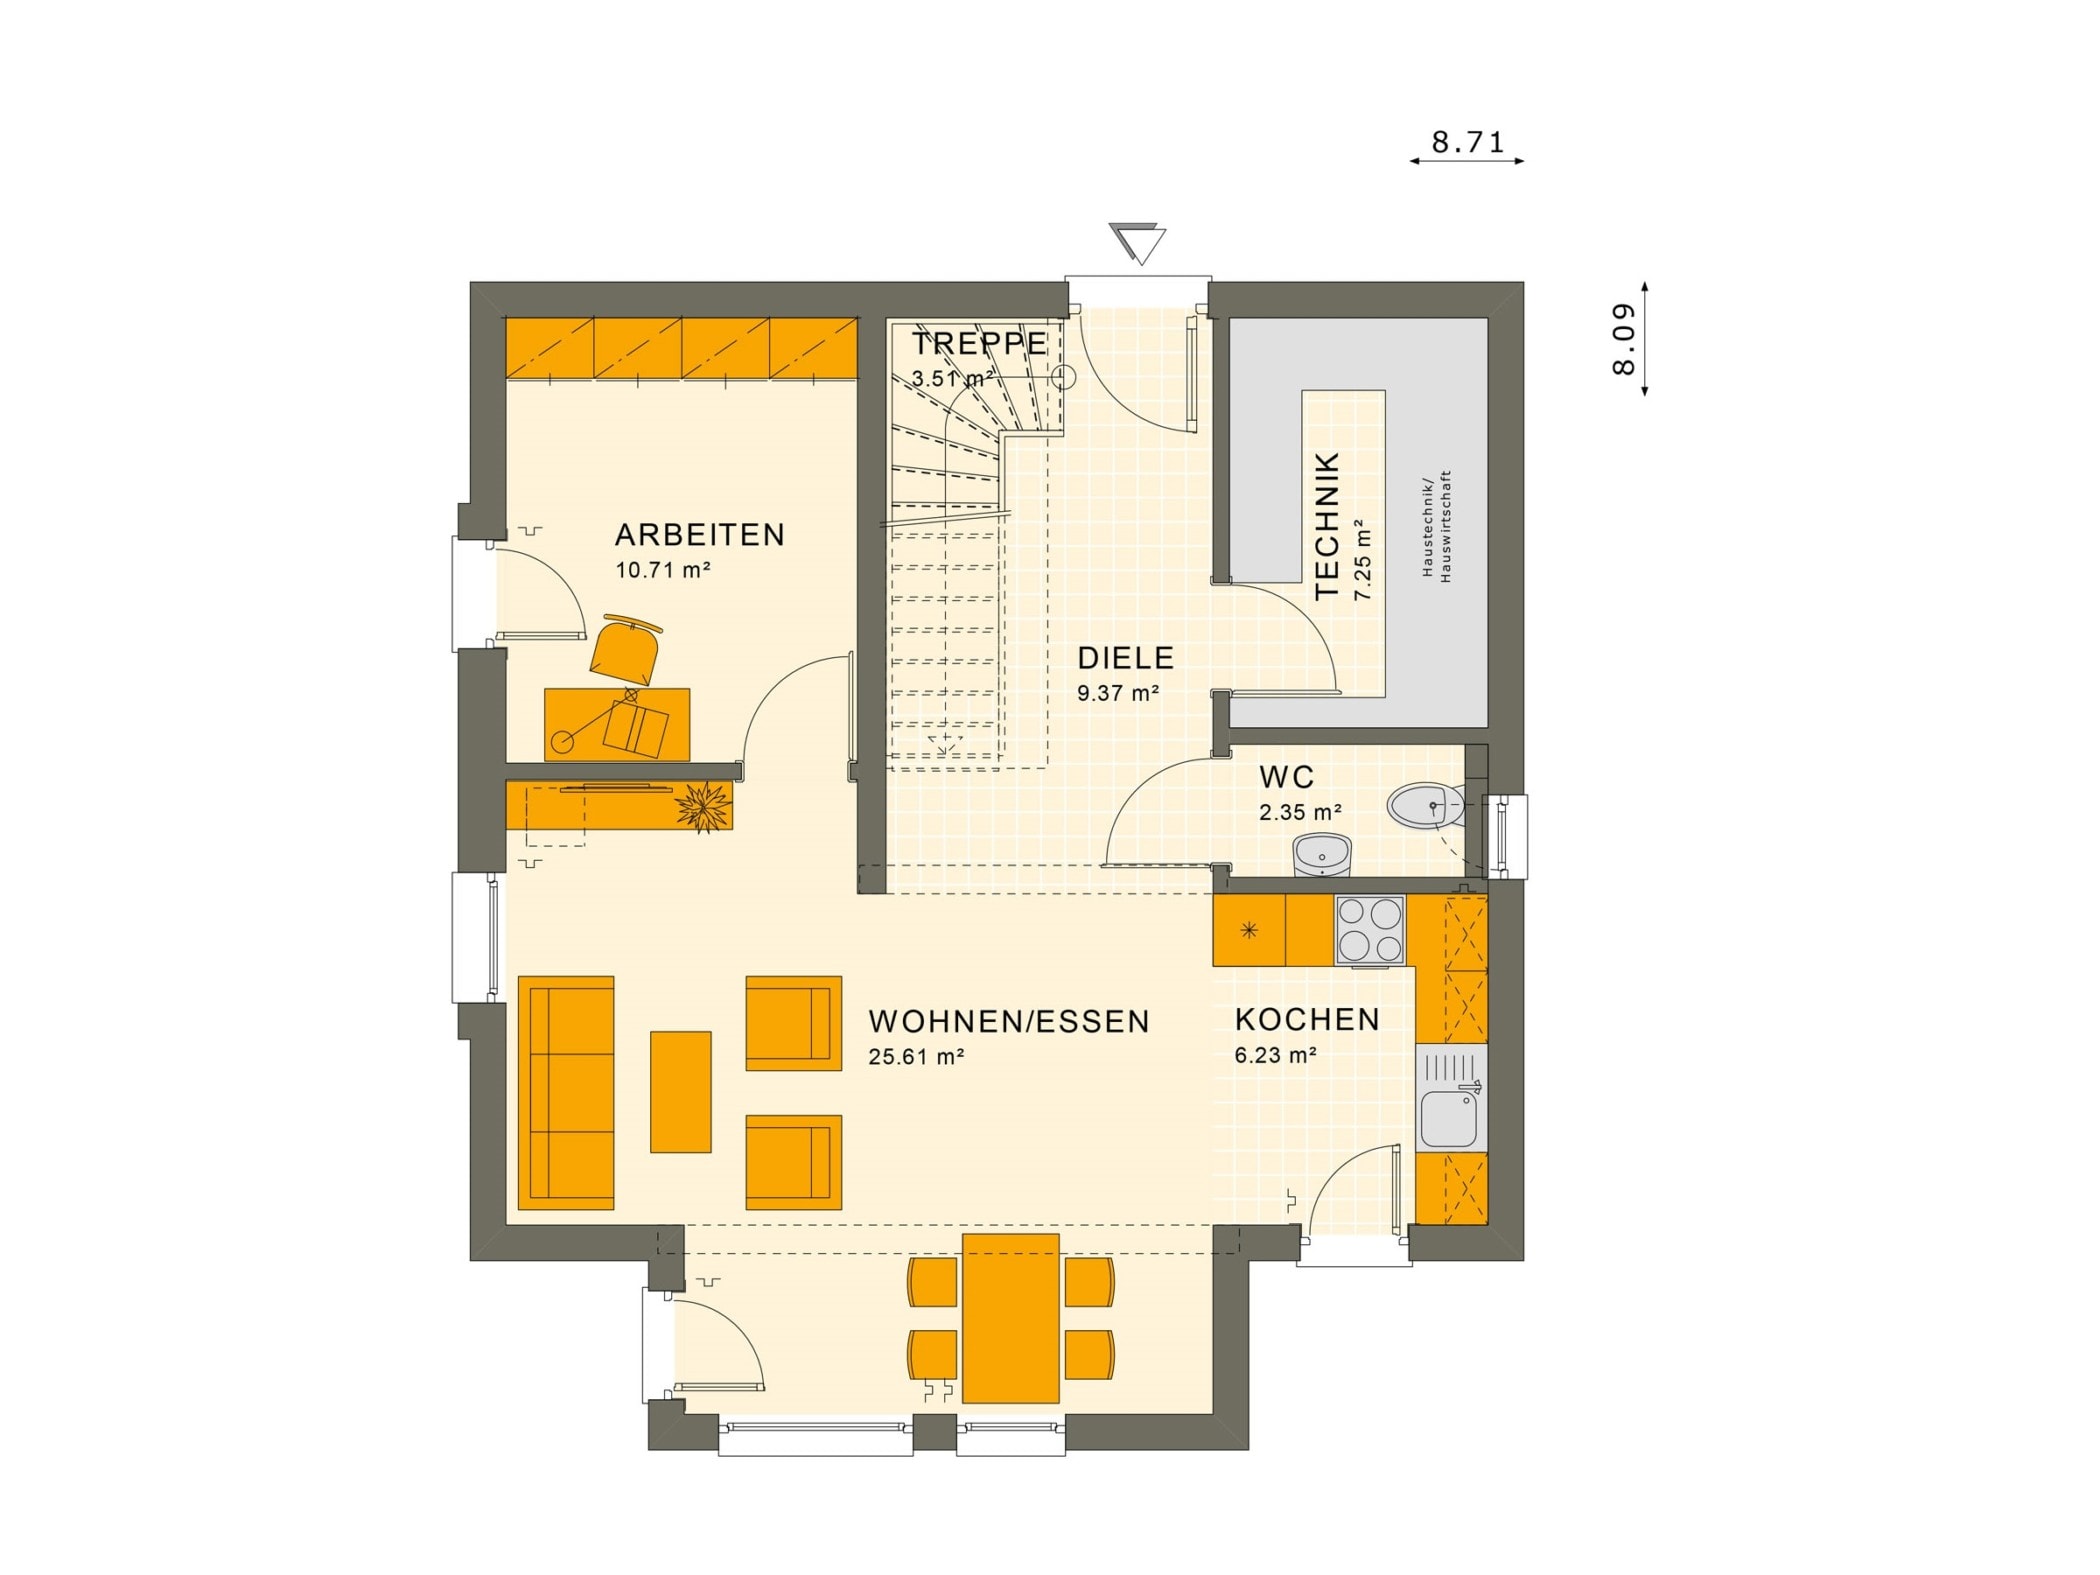 Grundriss Einfamilienhaus Erdgeschoss quadratisch mit Erker & Küche offen - Haus bauen Ideen Fertighaus SUNSHINE 113 V5 von Living Haus - HausbauDirekt.de